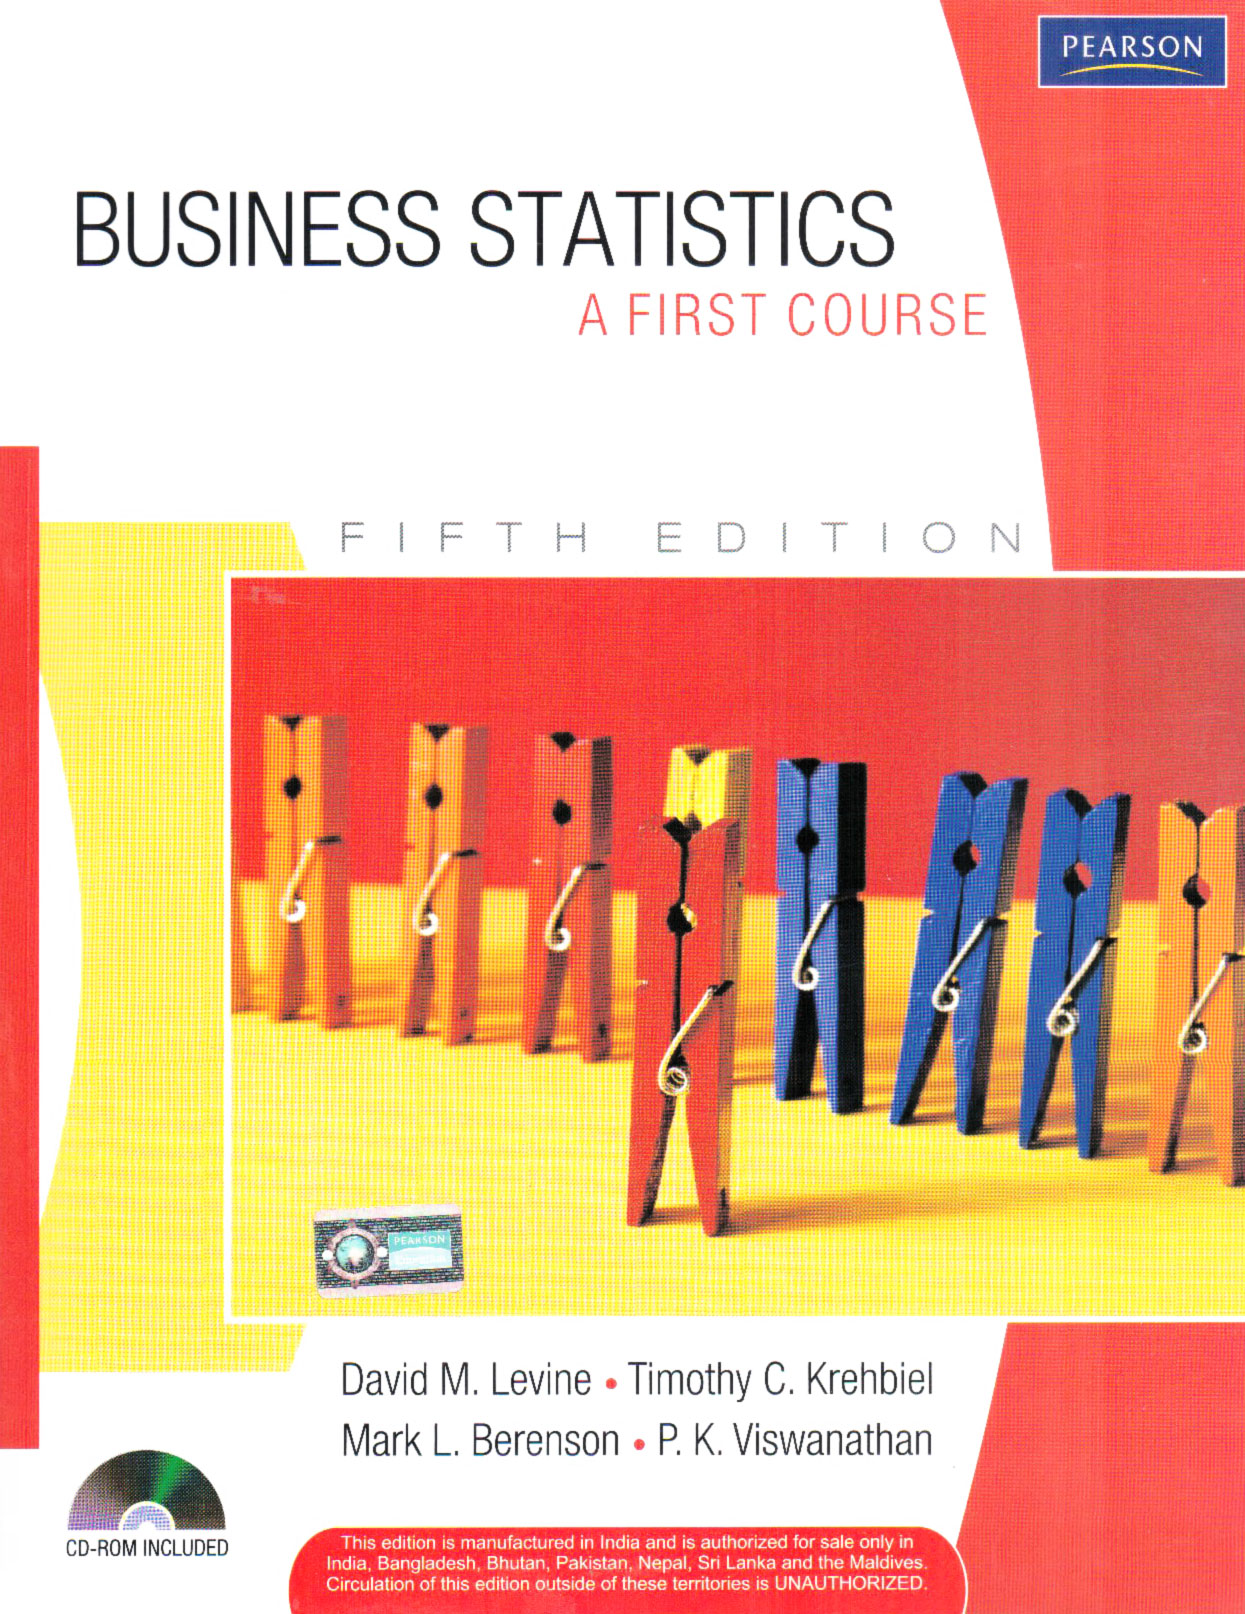 Business Statistics: A First Course (5th Edition) David M. Levine, Timothy C. Krehbiel and Mark L. Berenson